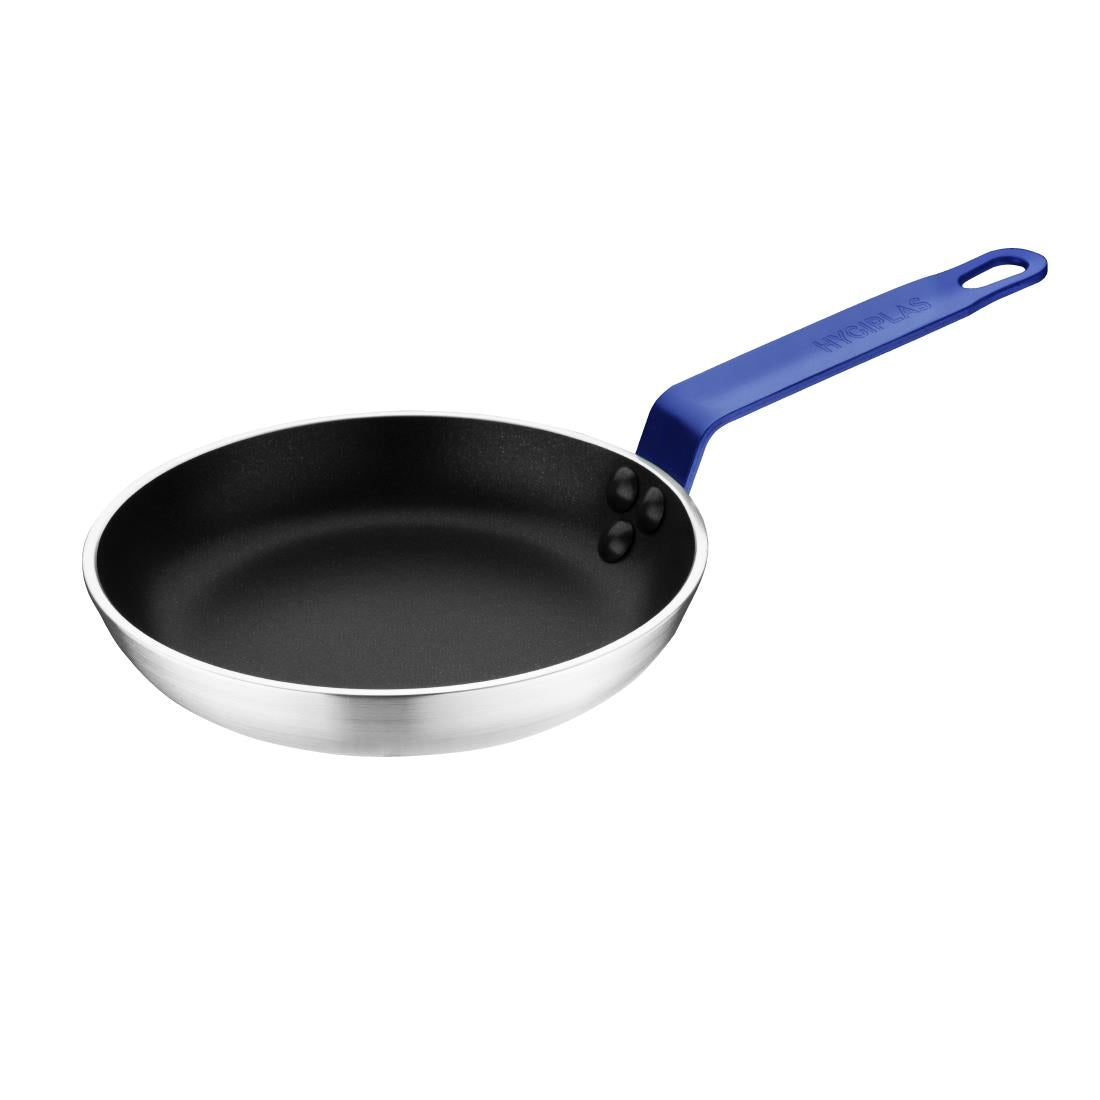 Hygiplas Aluminium Non-Stick Teflon Platinum Plus Frying Pan with Blue Handle 19cm